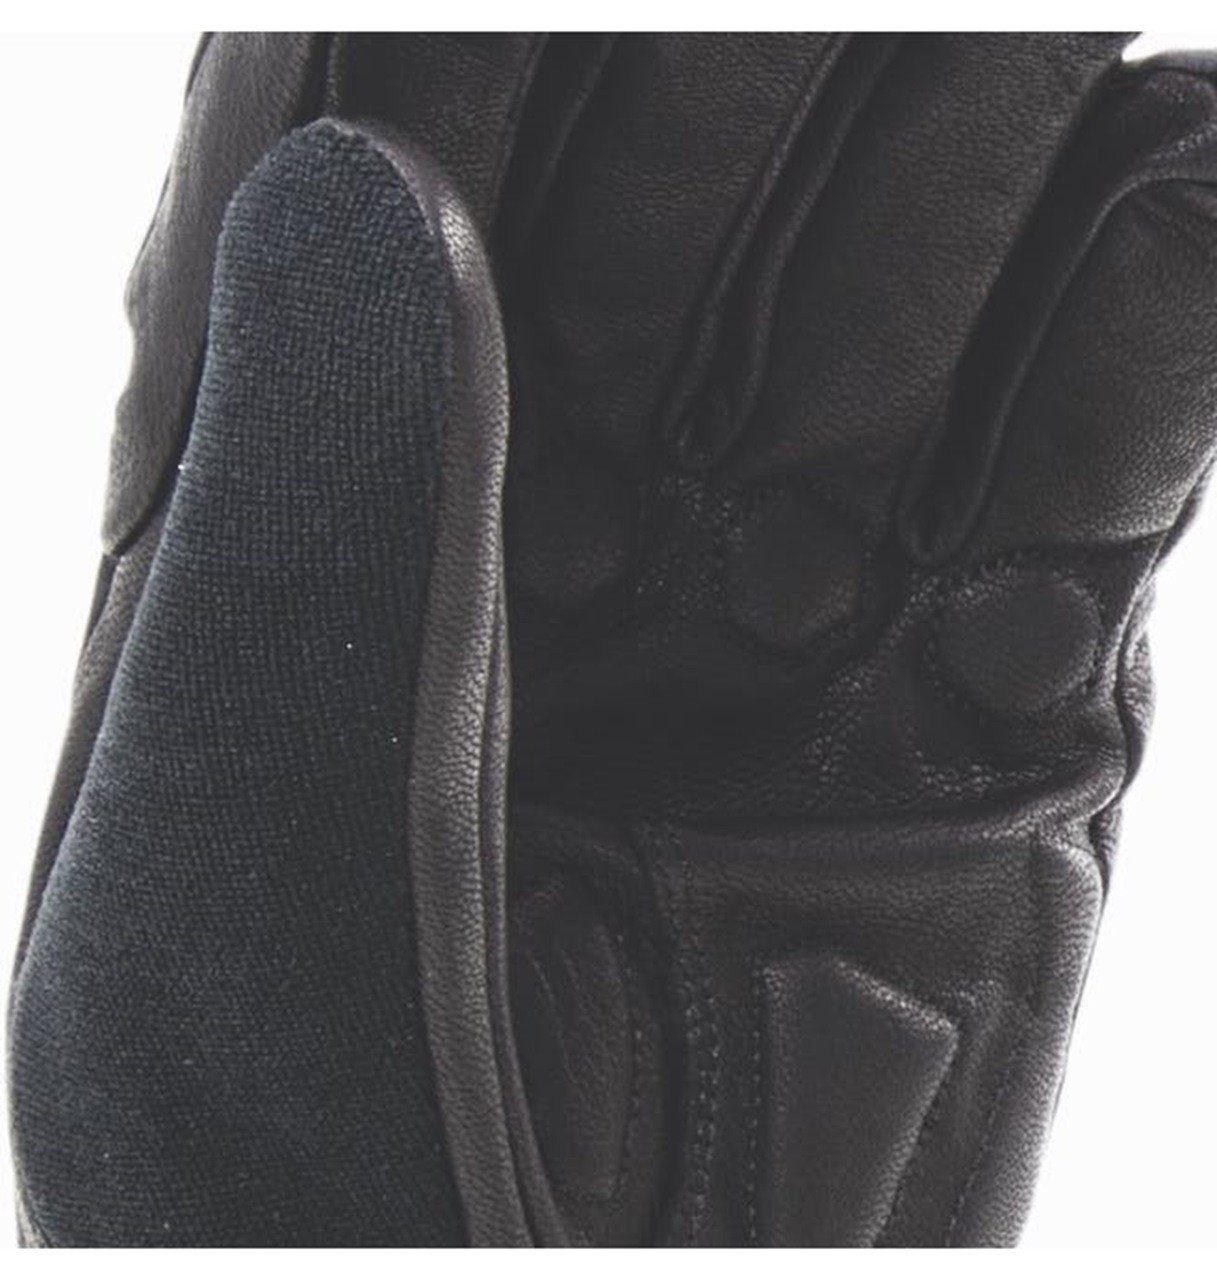 Sealskinz Glove Heated Waterproof Cycle Multisporthandschuhe